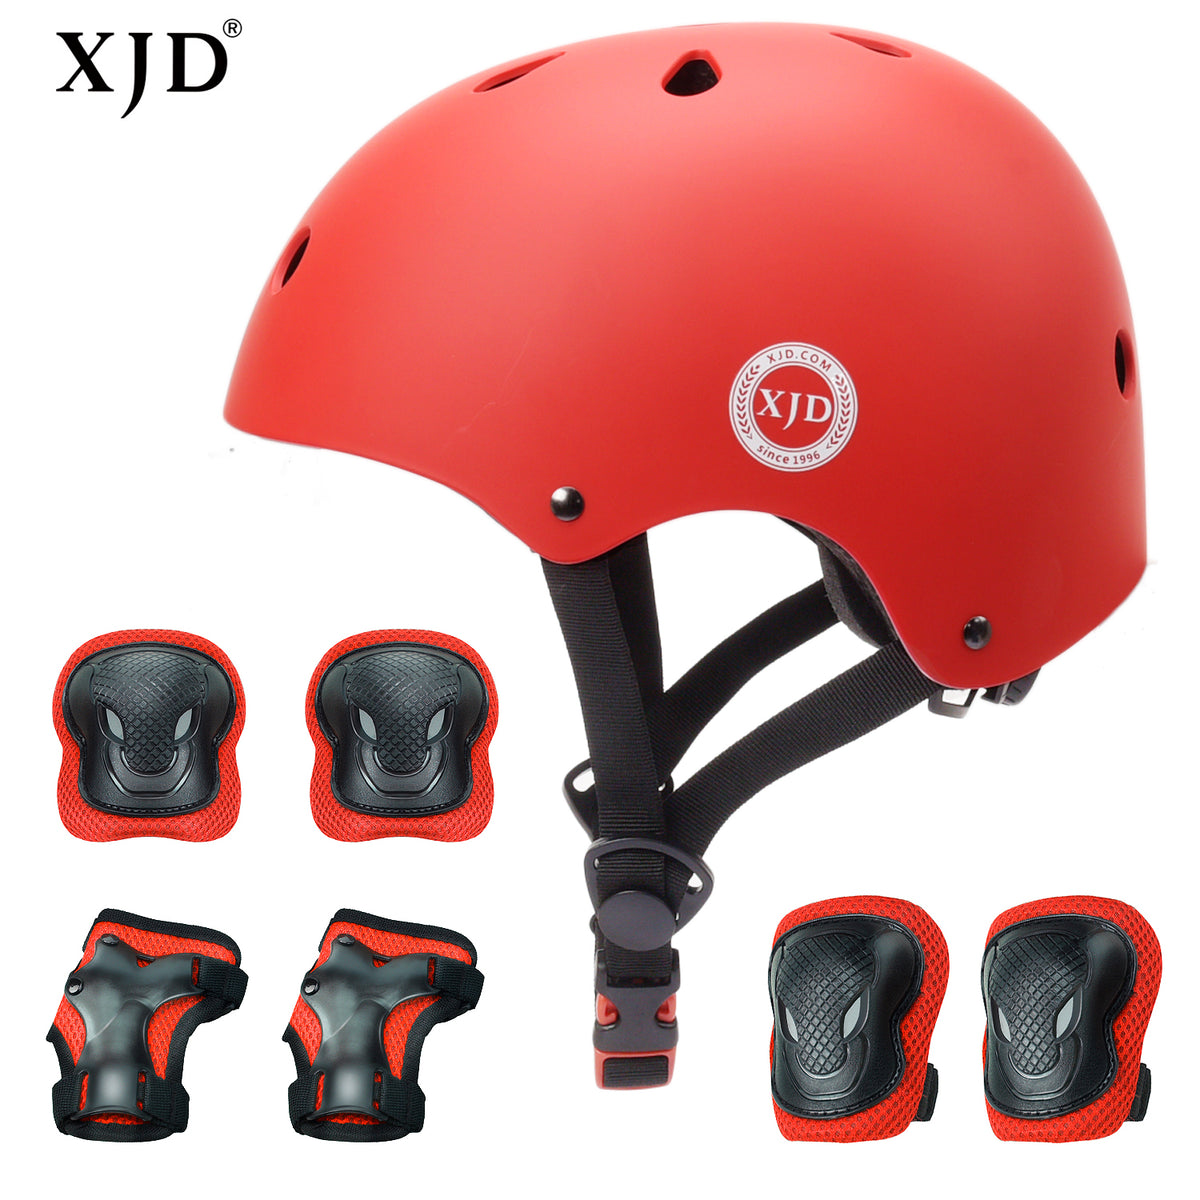 XJD Kids Helmet Sets In Red In Stock USA